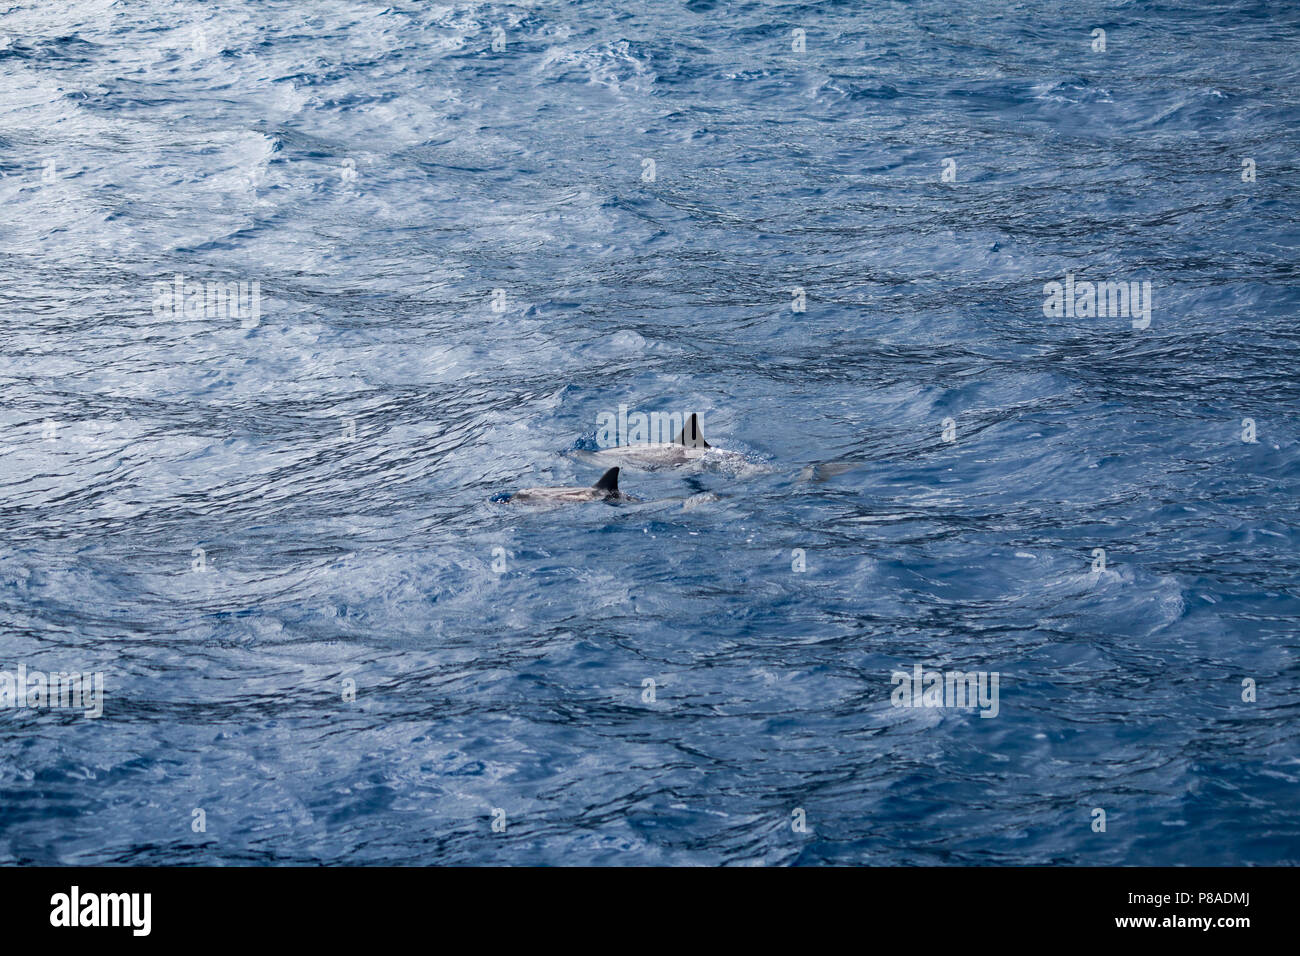 Wild Hawaiian Spinner dolphins, Stenella longirostris, swim freely off the coast of Lana'i. Stock Photo